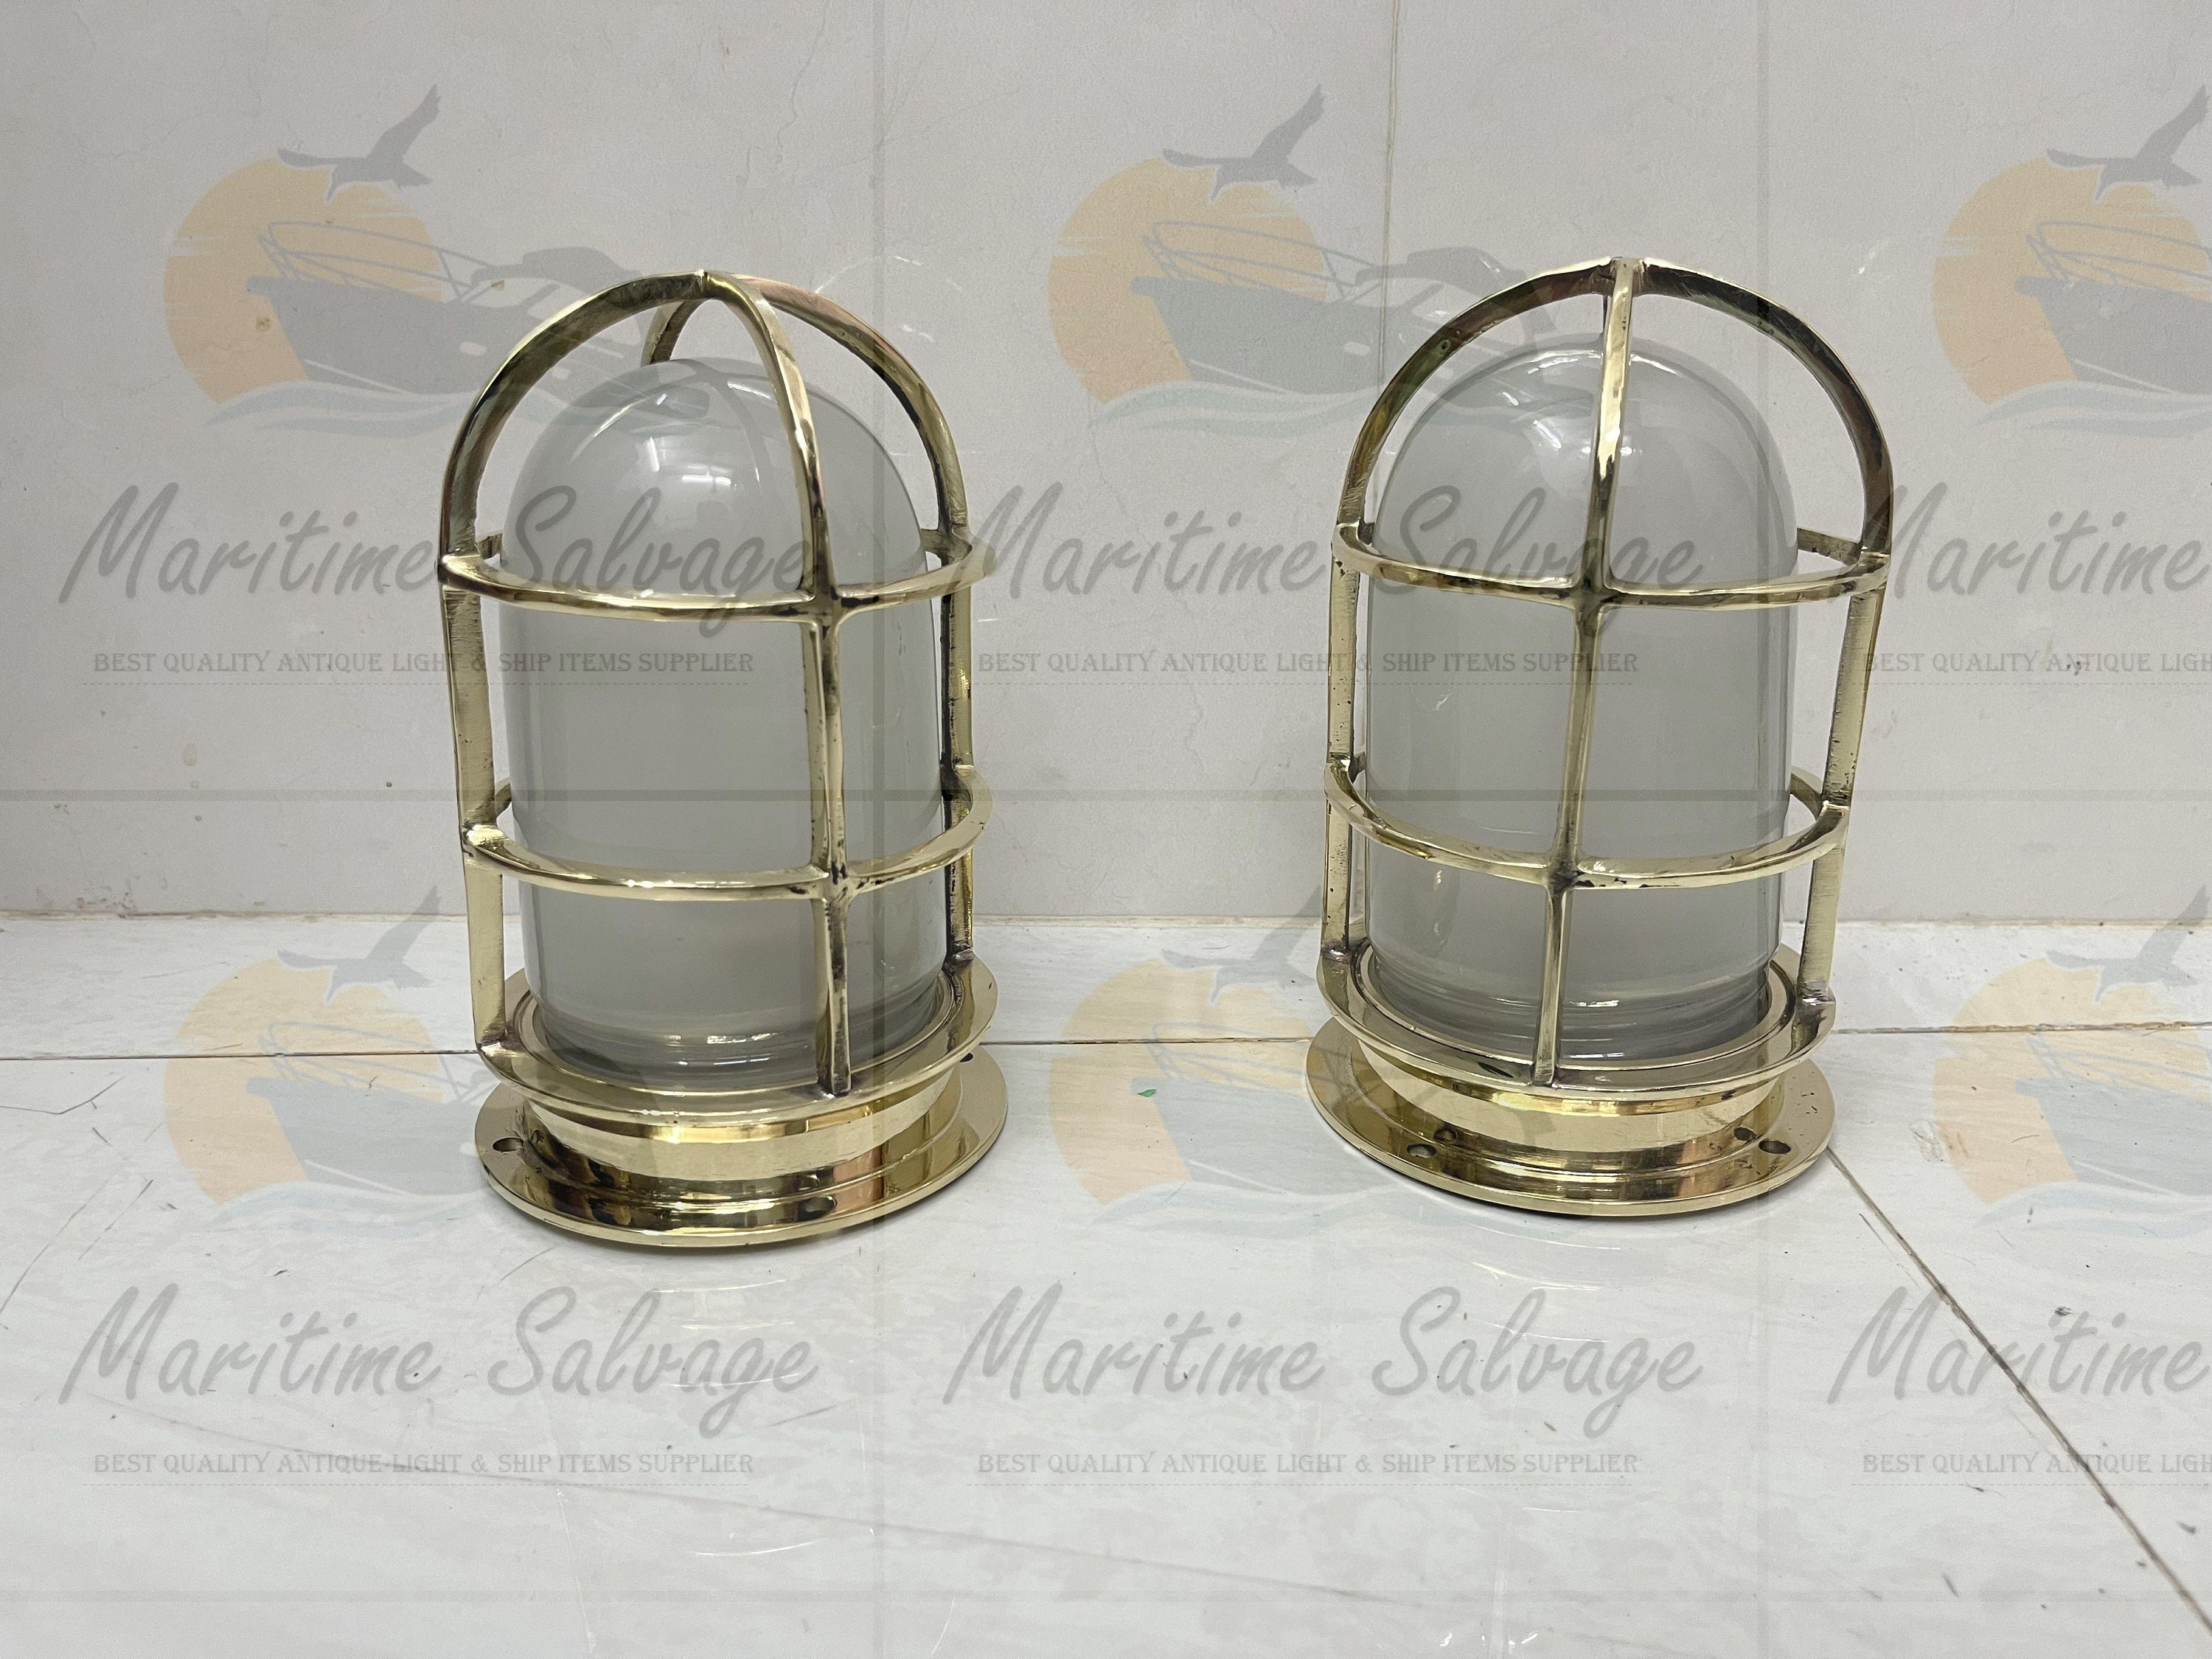 Norwegian Navy Brass Bulkhead Wall Light – Trinity Marine